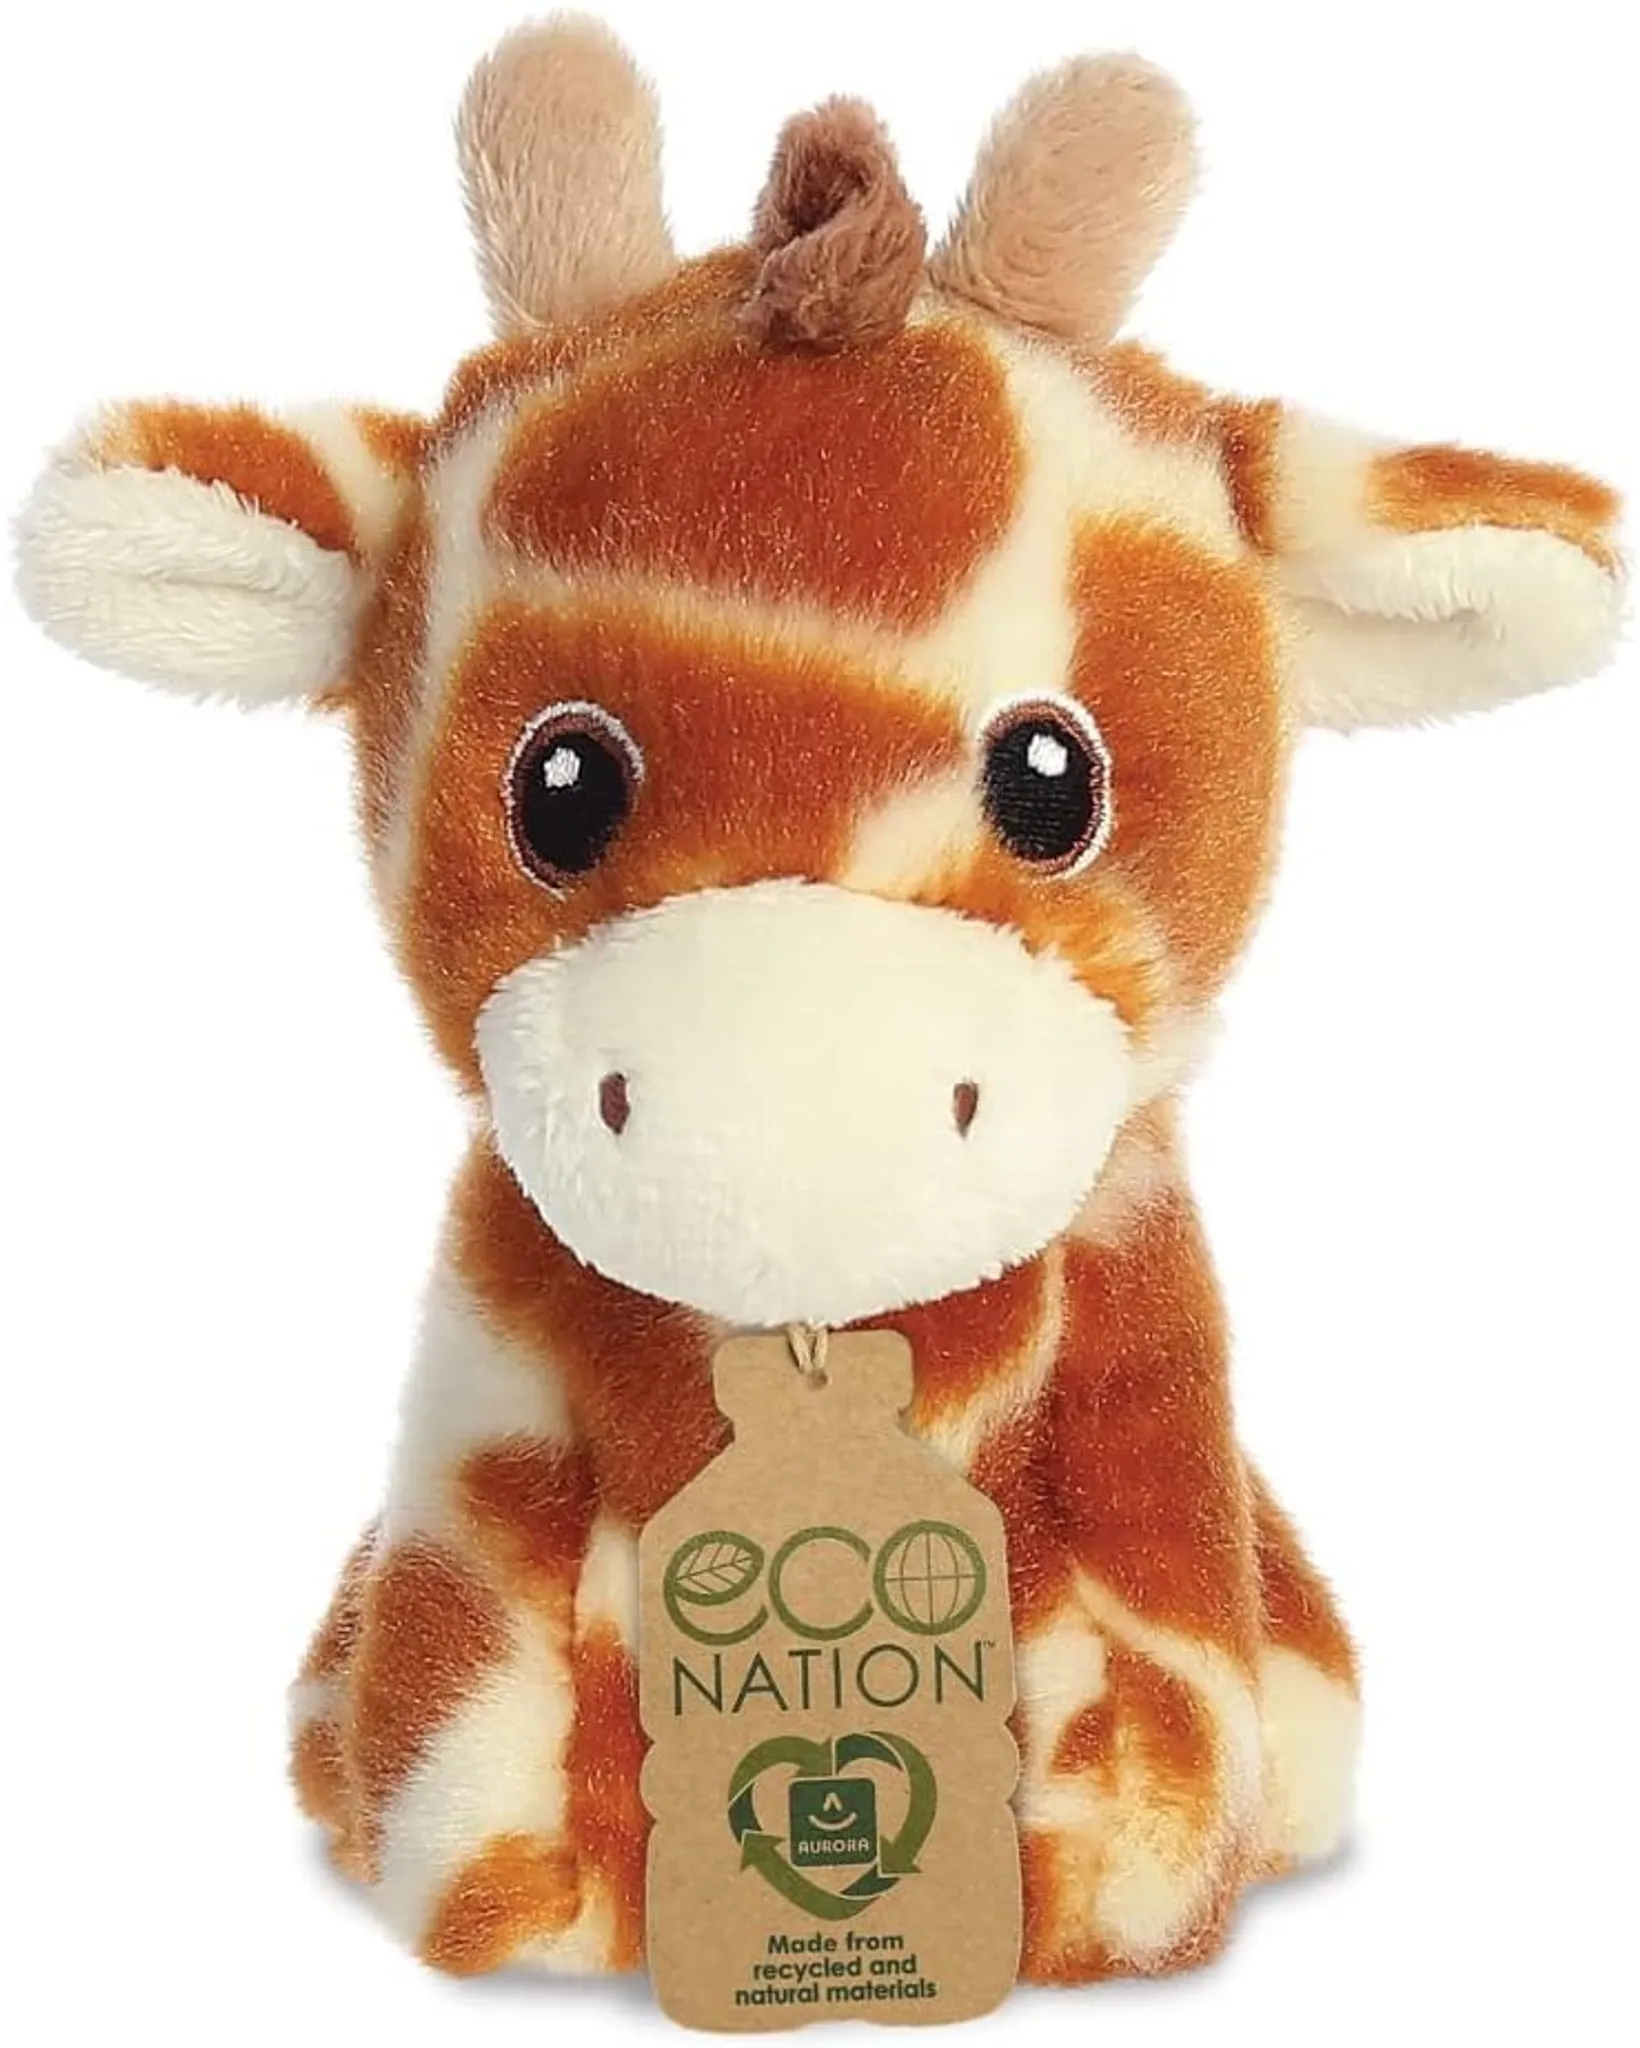 Eco Nation Mini Giraffe 35068 Aurora World Peluche Braun Stofftier